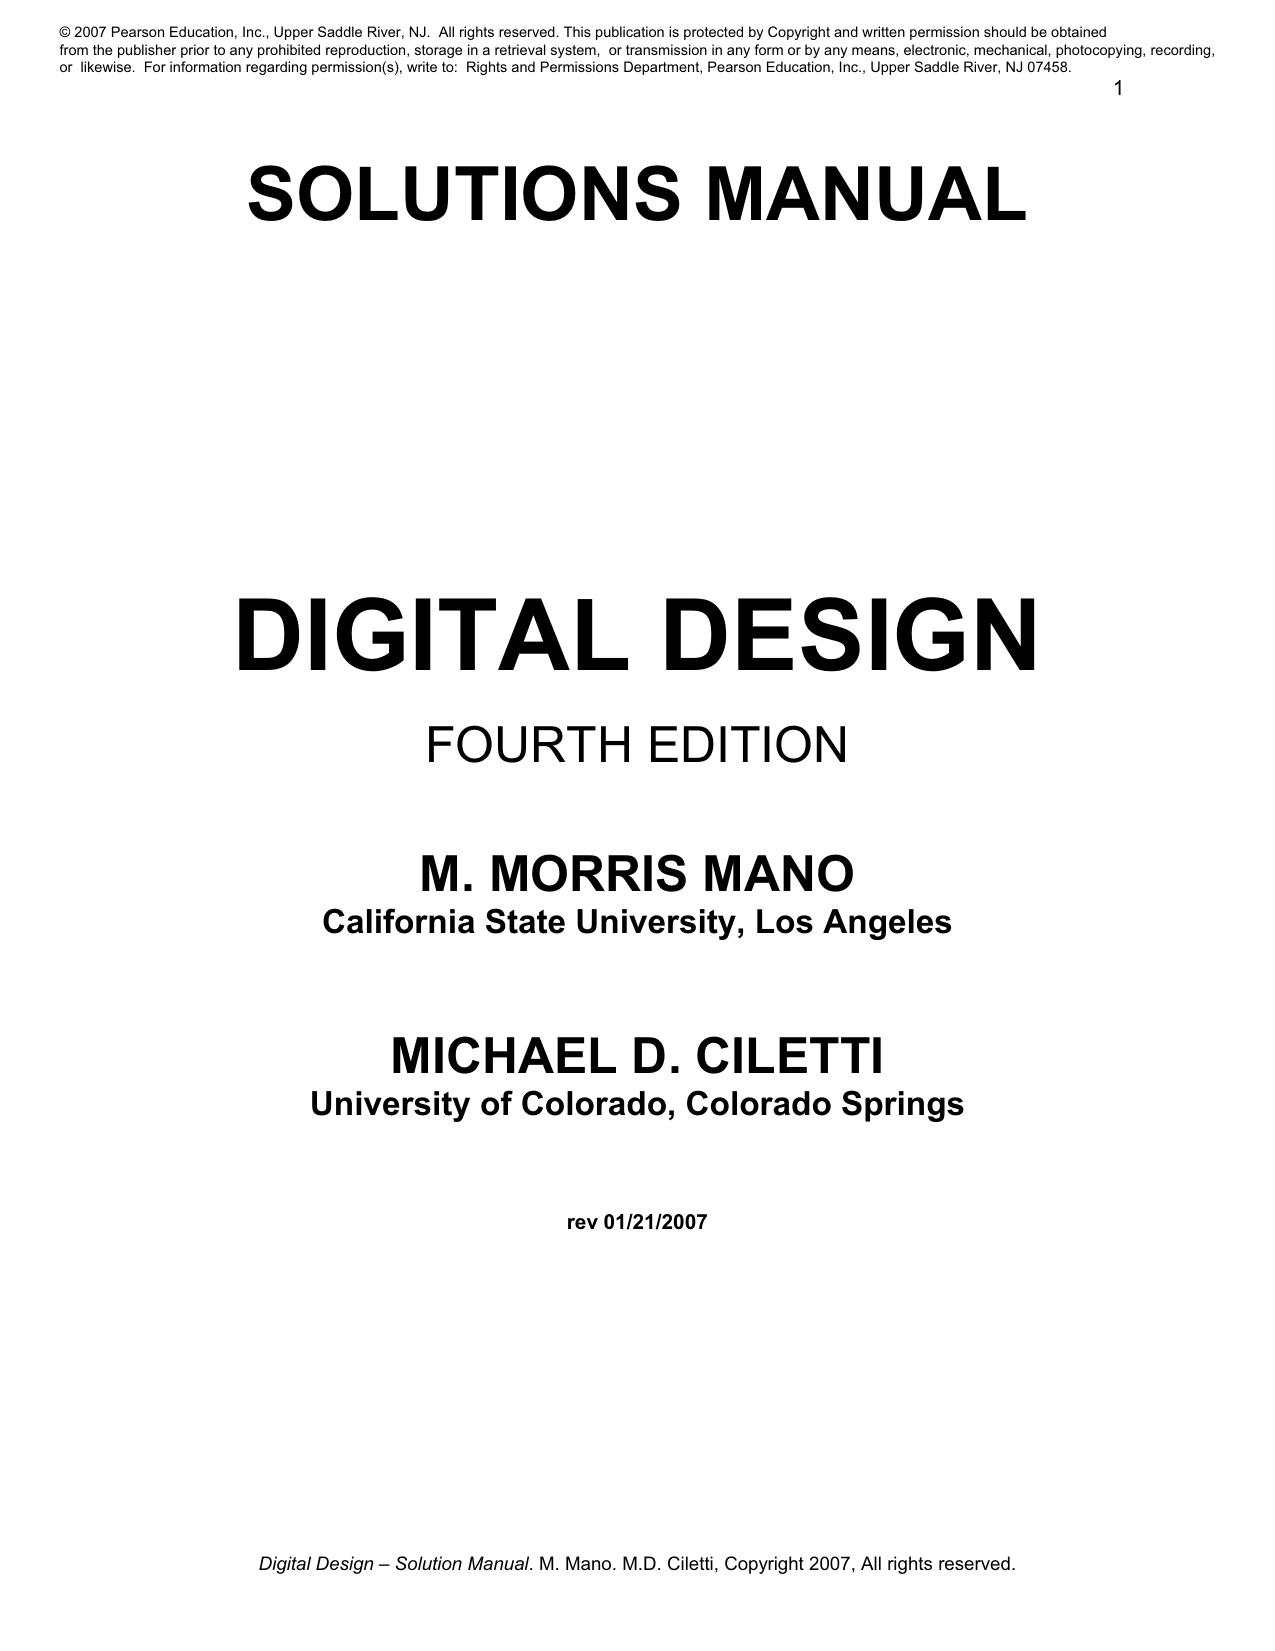 Microsoft Word - Solutions Manual 4e.doc